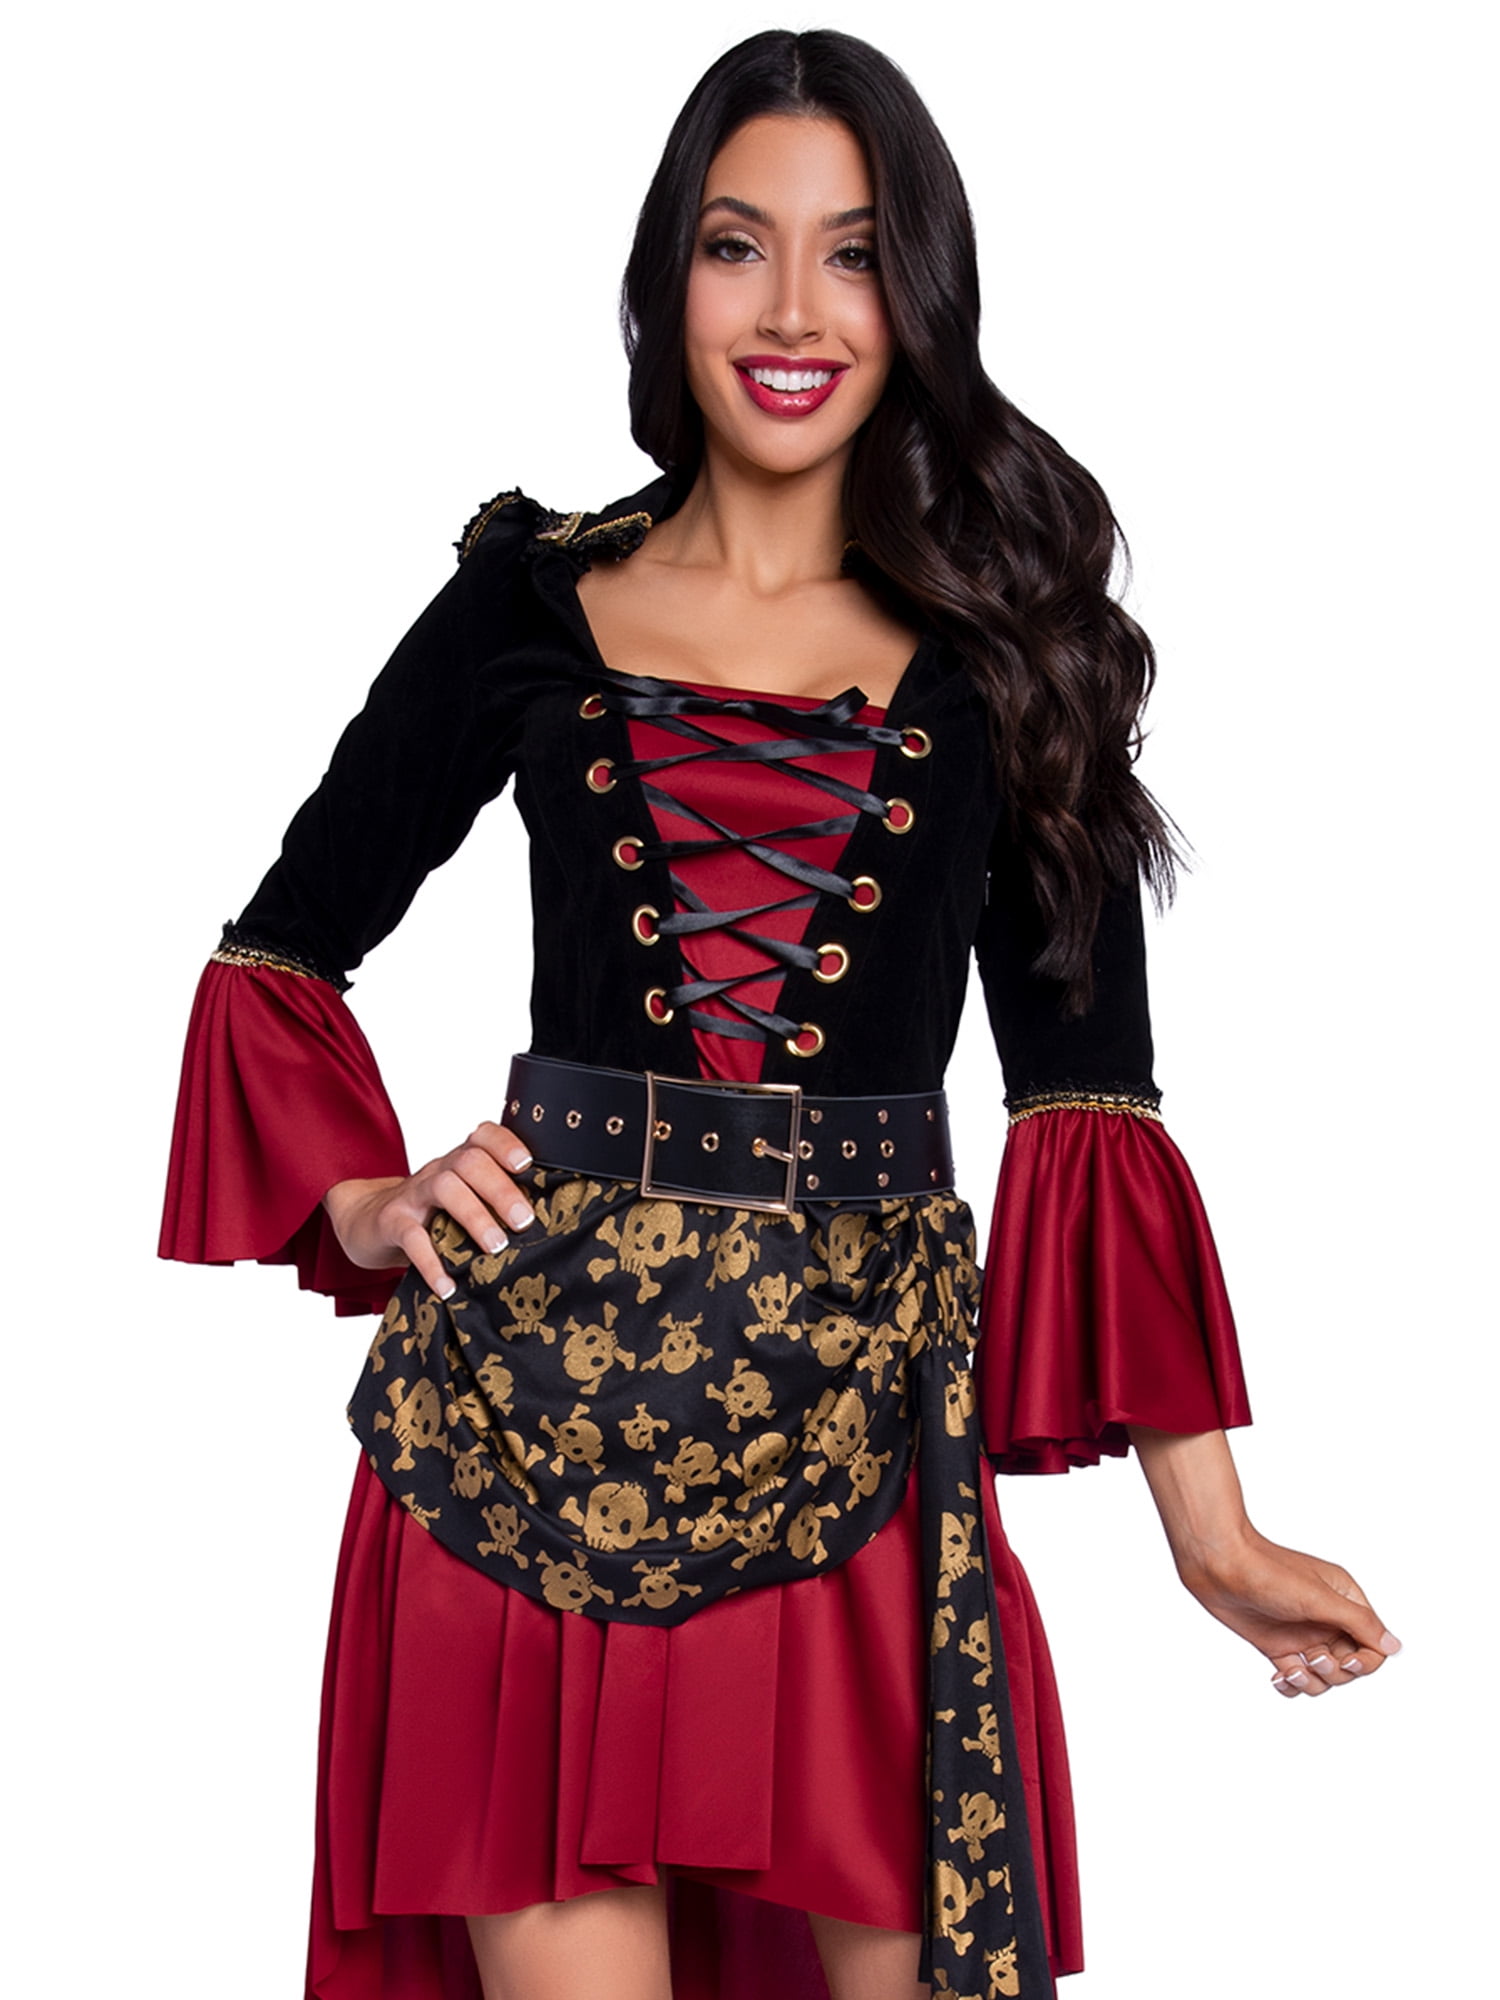 verlies Beangstigend Beleefd Wonderland Women's Halloween Pirate Captain Fancy Dress Costume for Adult,  Medium - Walmart.com